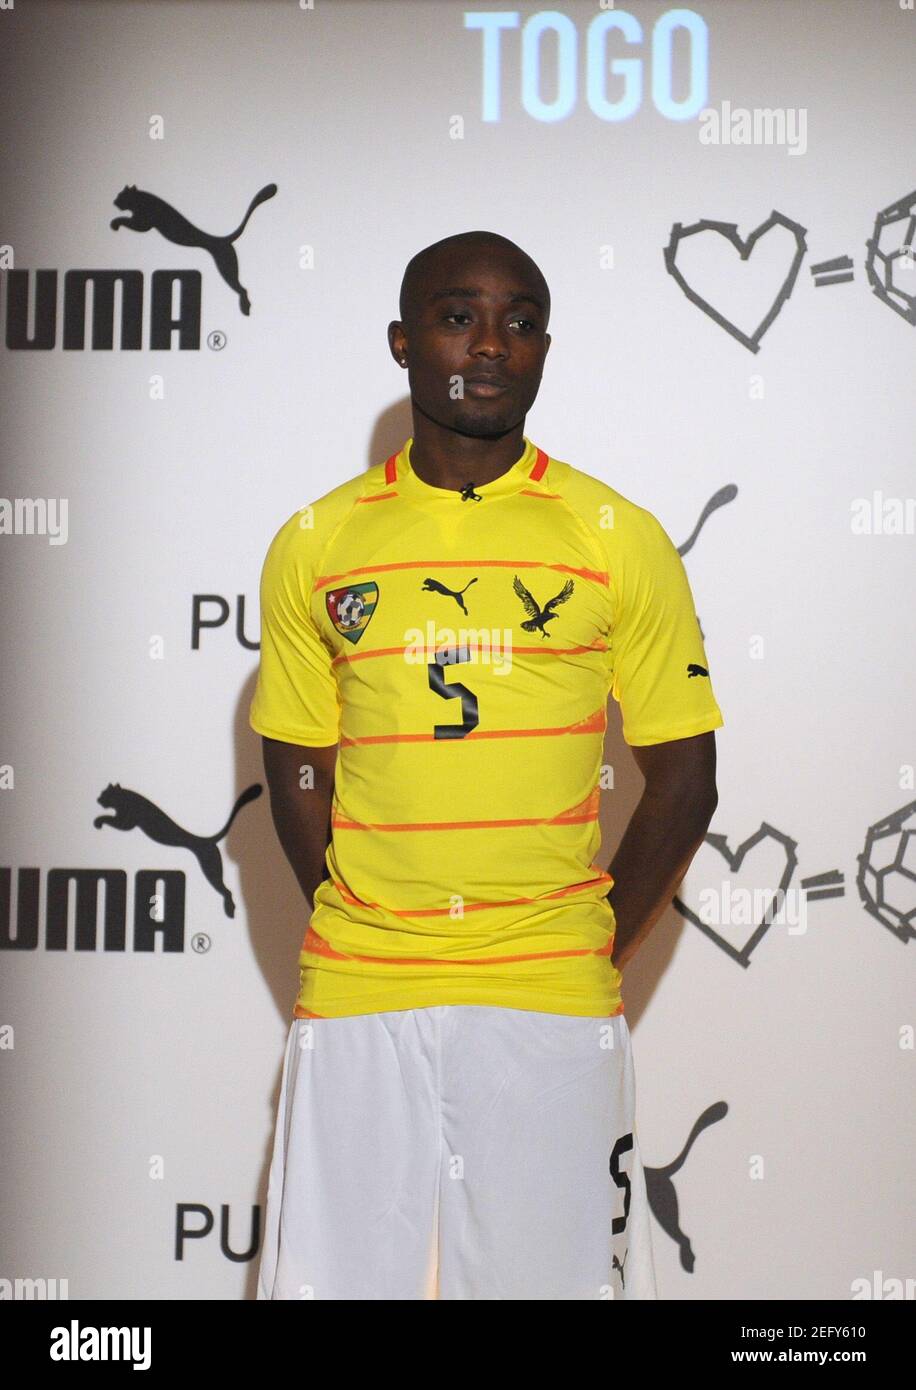 Football - PUMA Unveils 2012 African Football Kits - The Design Museum,  London - 7/11/11 Serge Akakpo